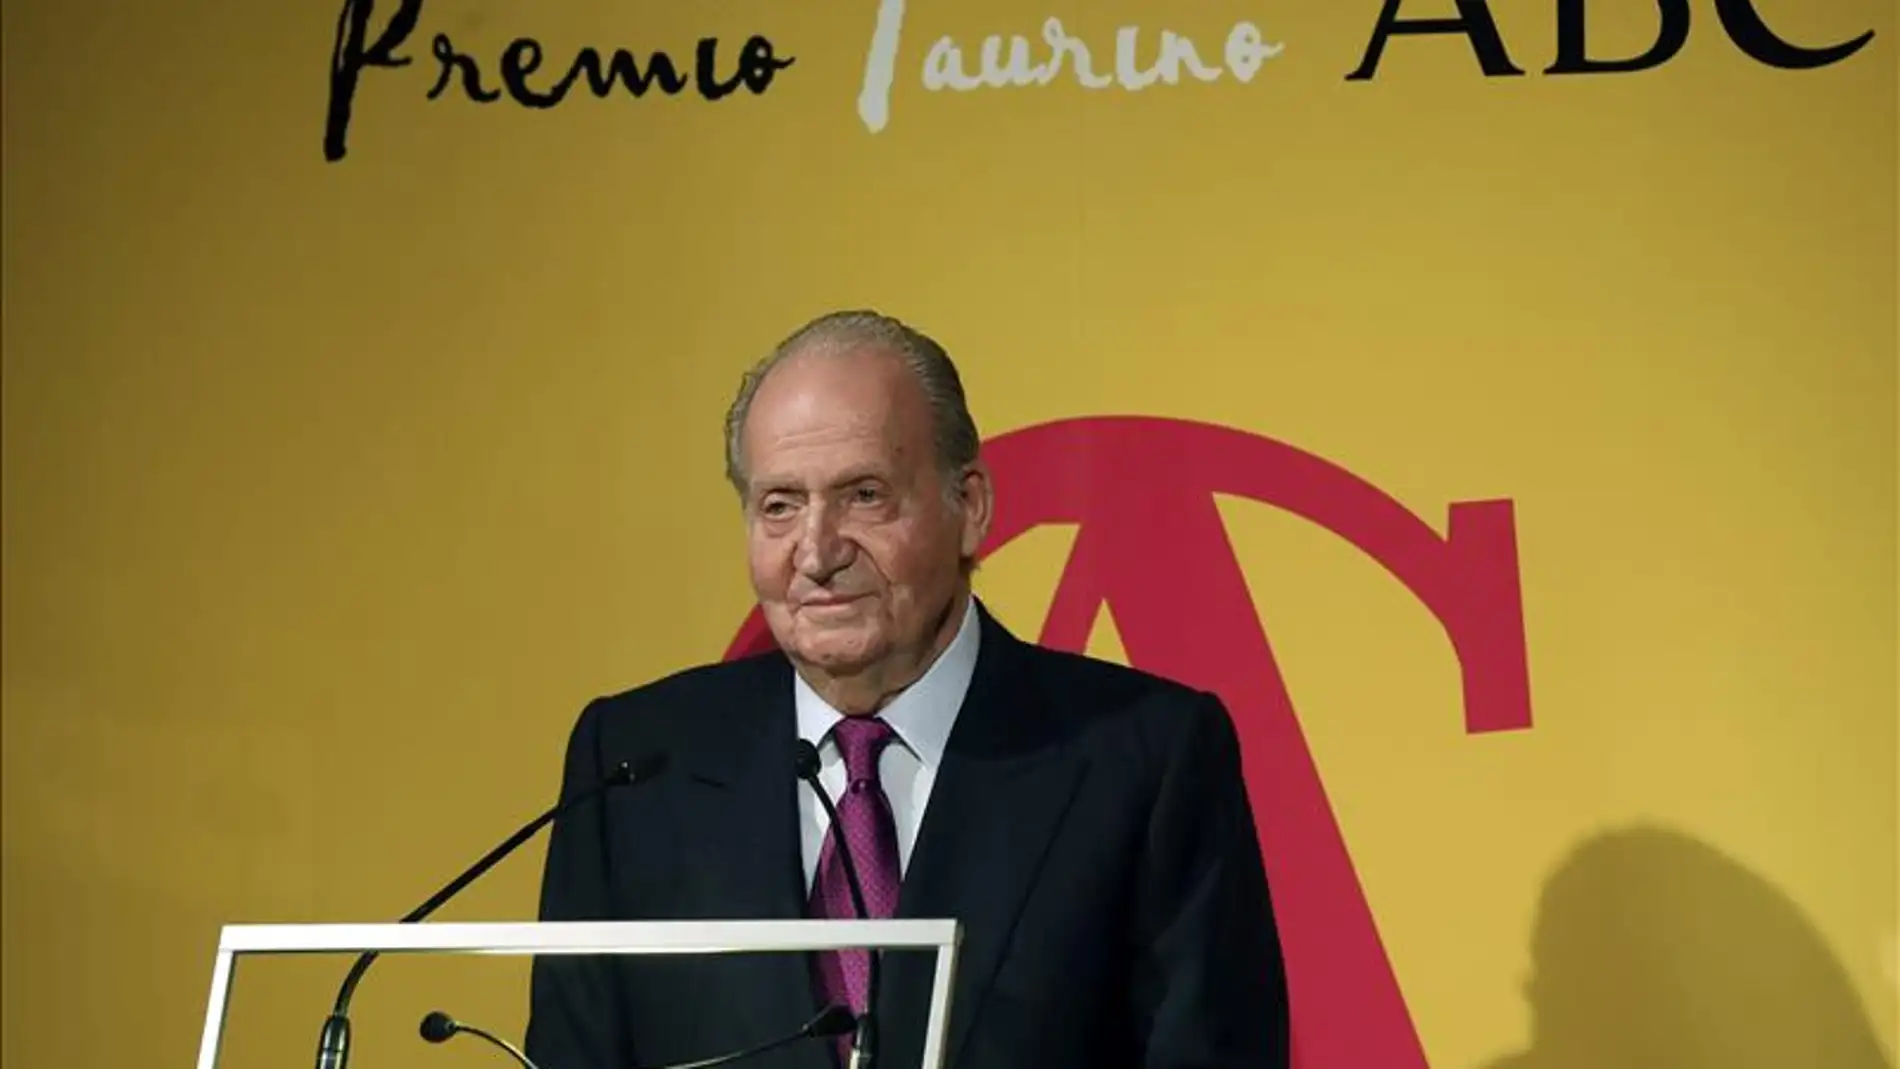 Don Juan Carlos defiende la tauromaquia